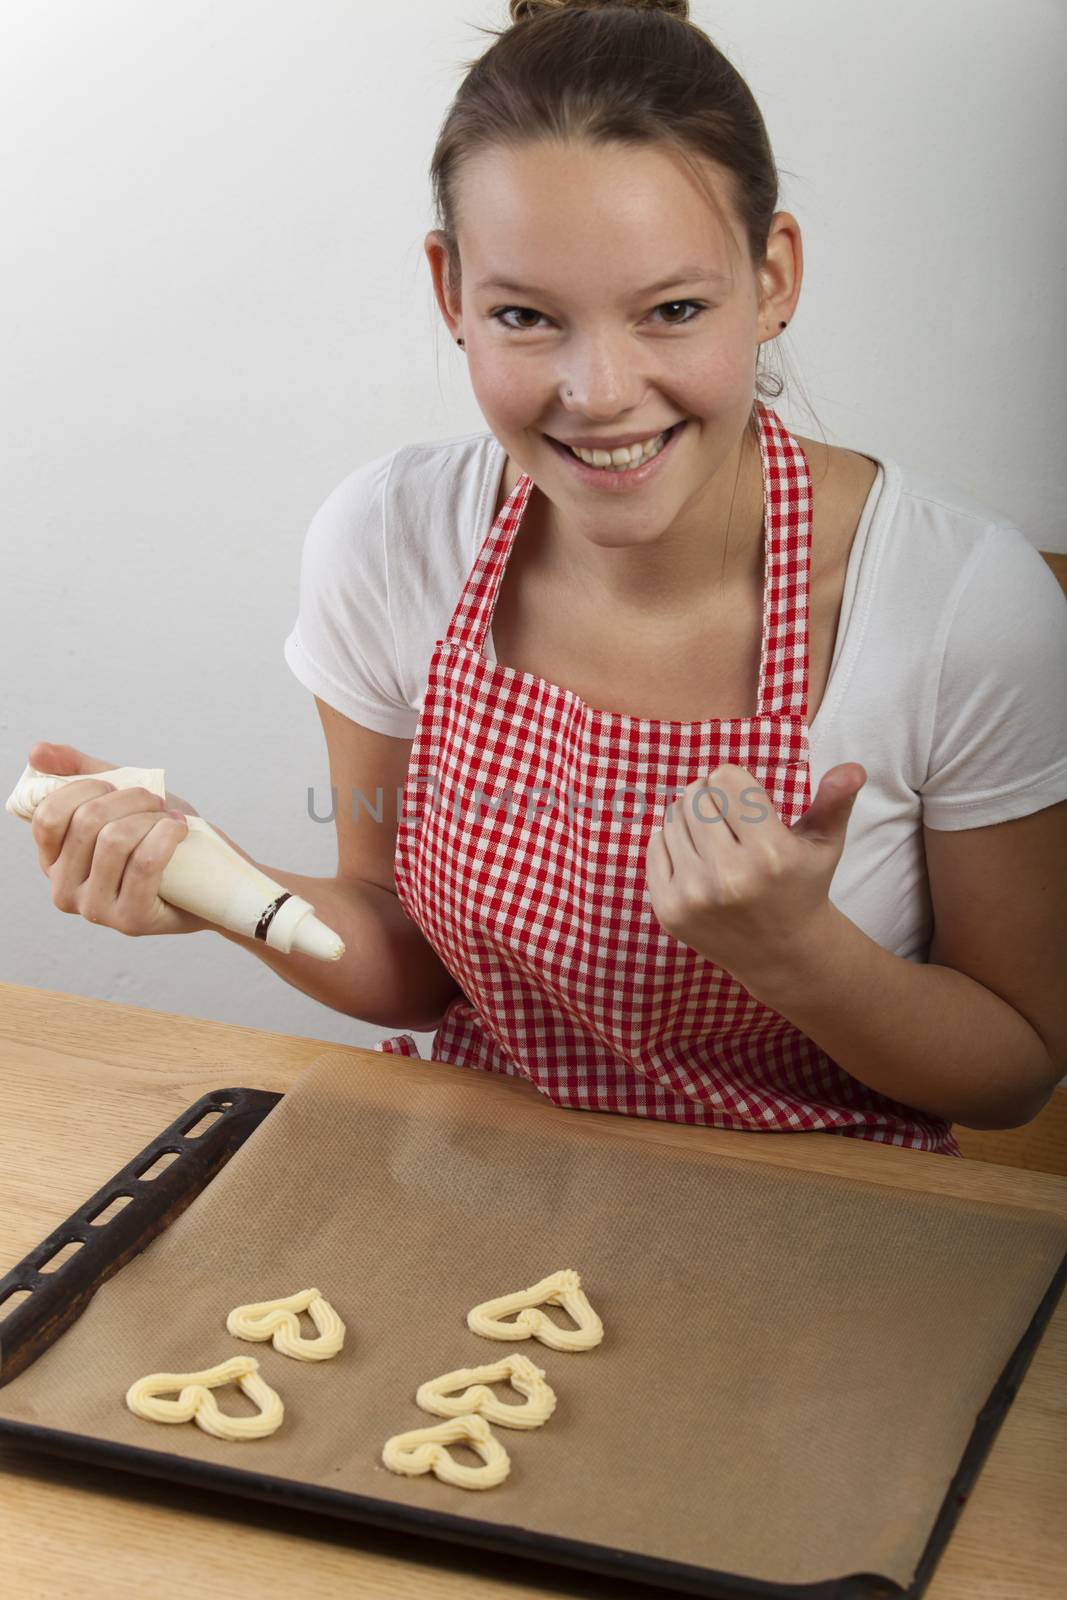 woman baking cookies